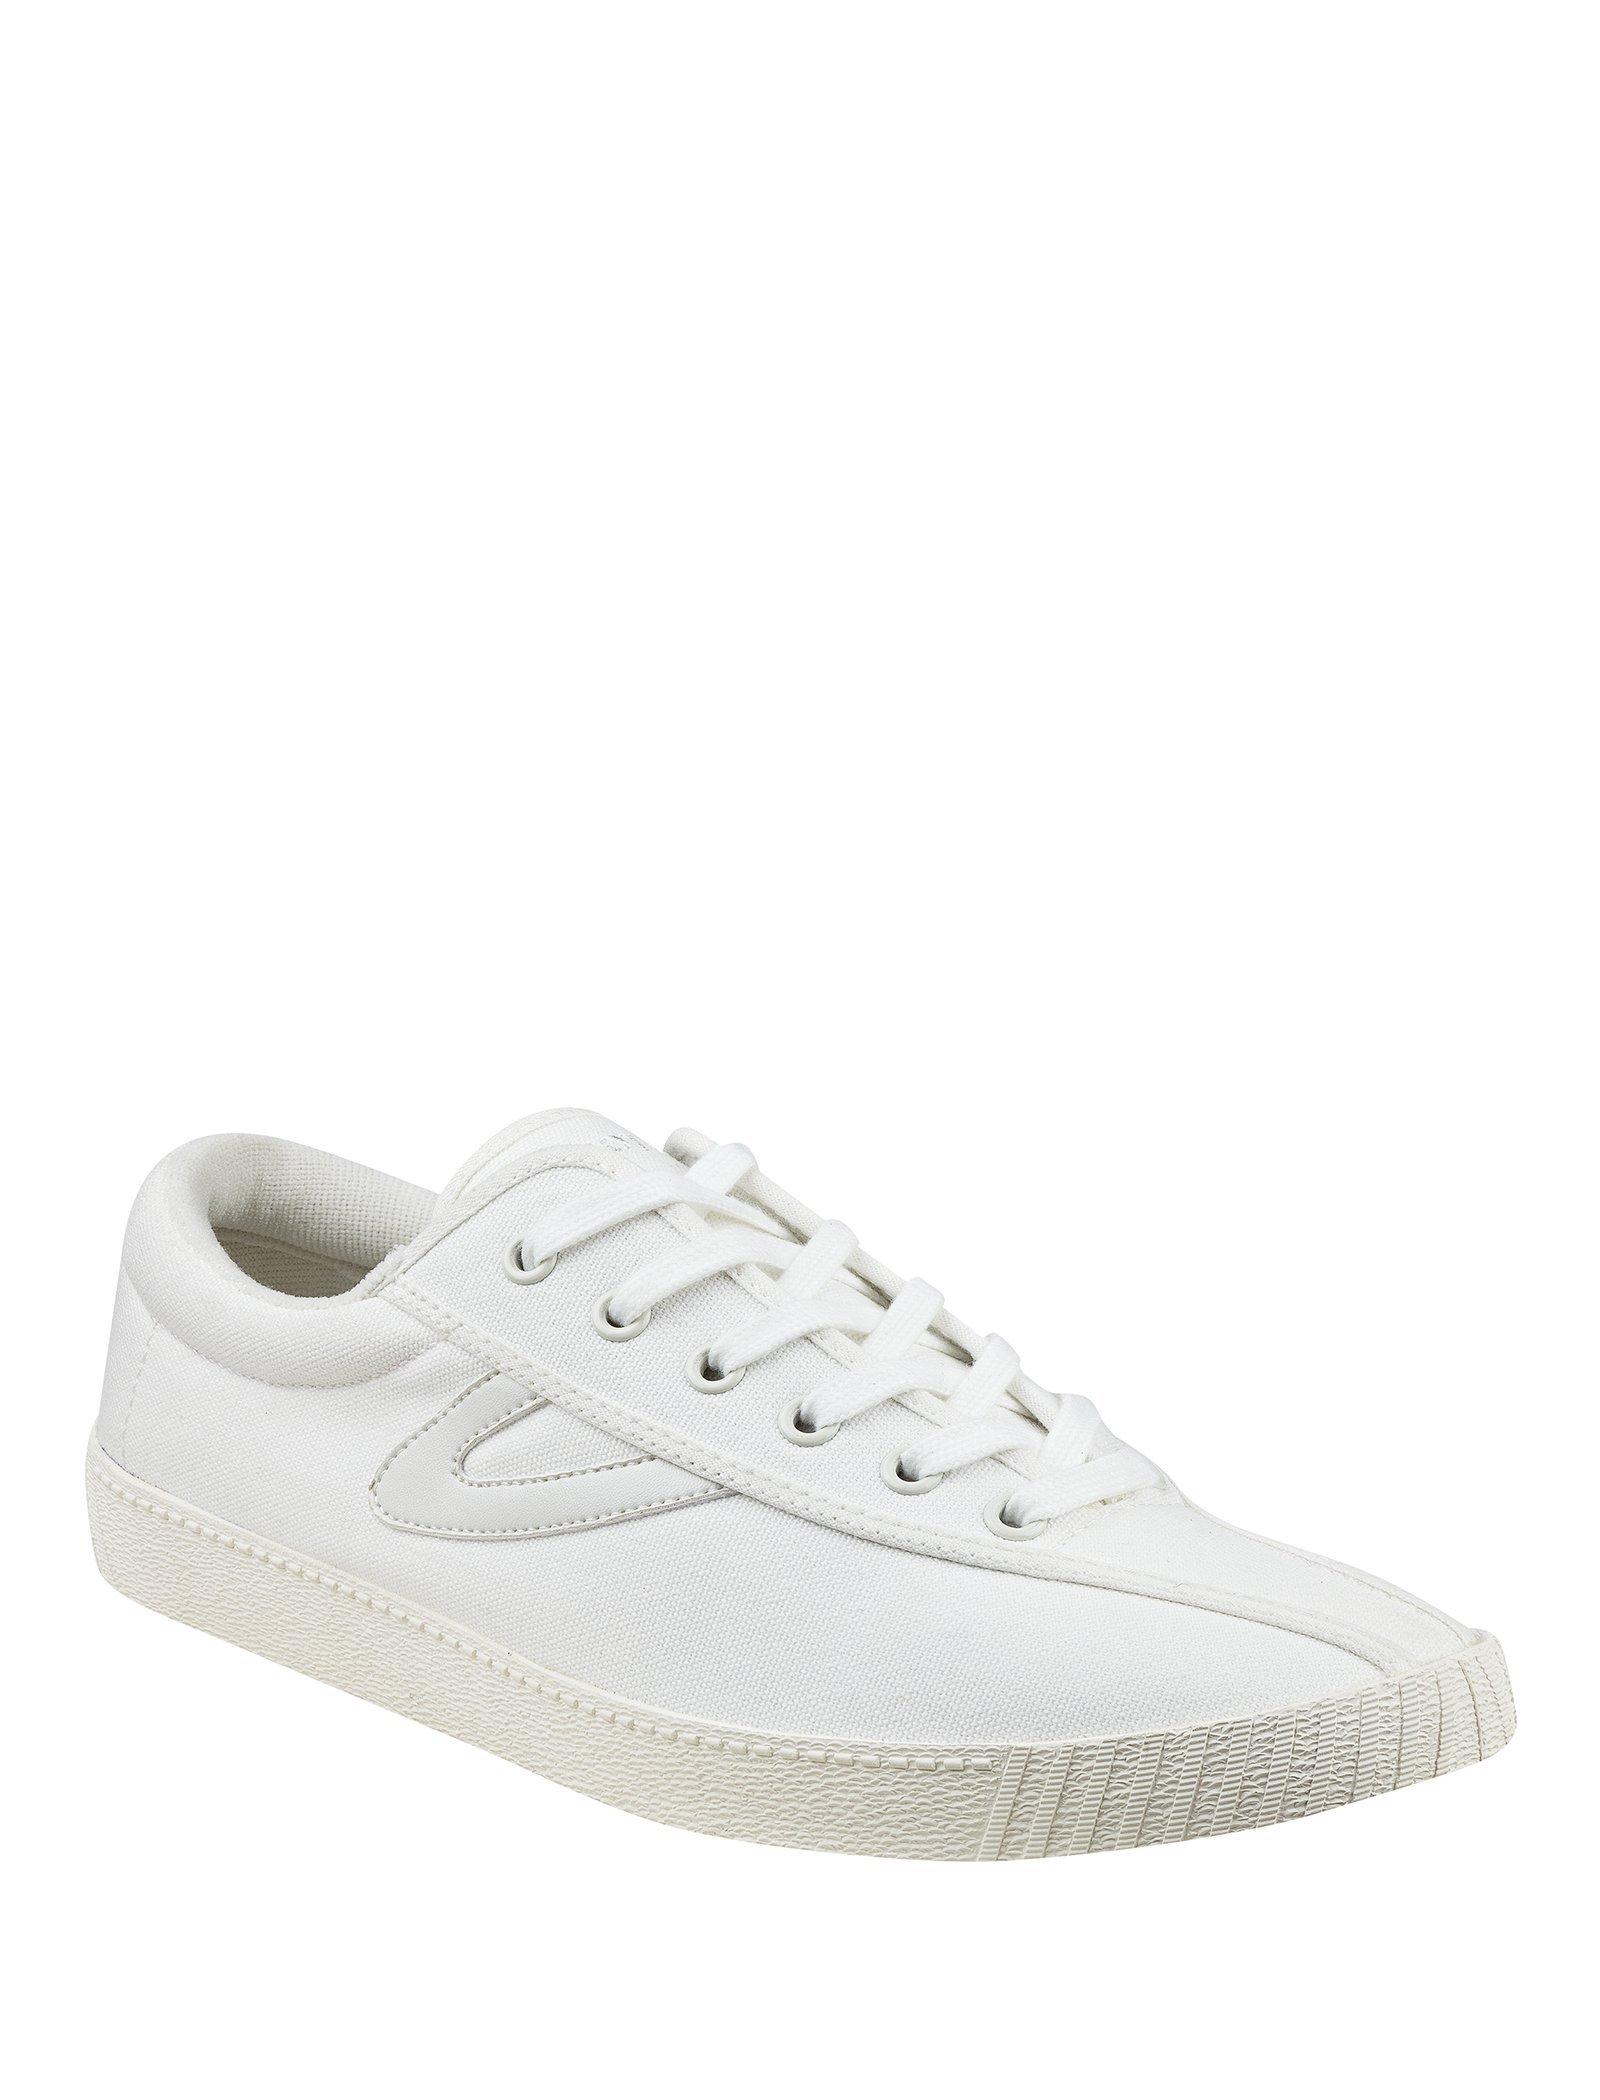 white tretorn shoes